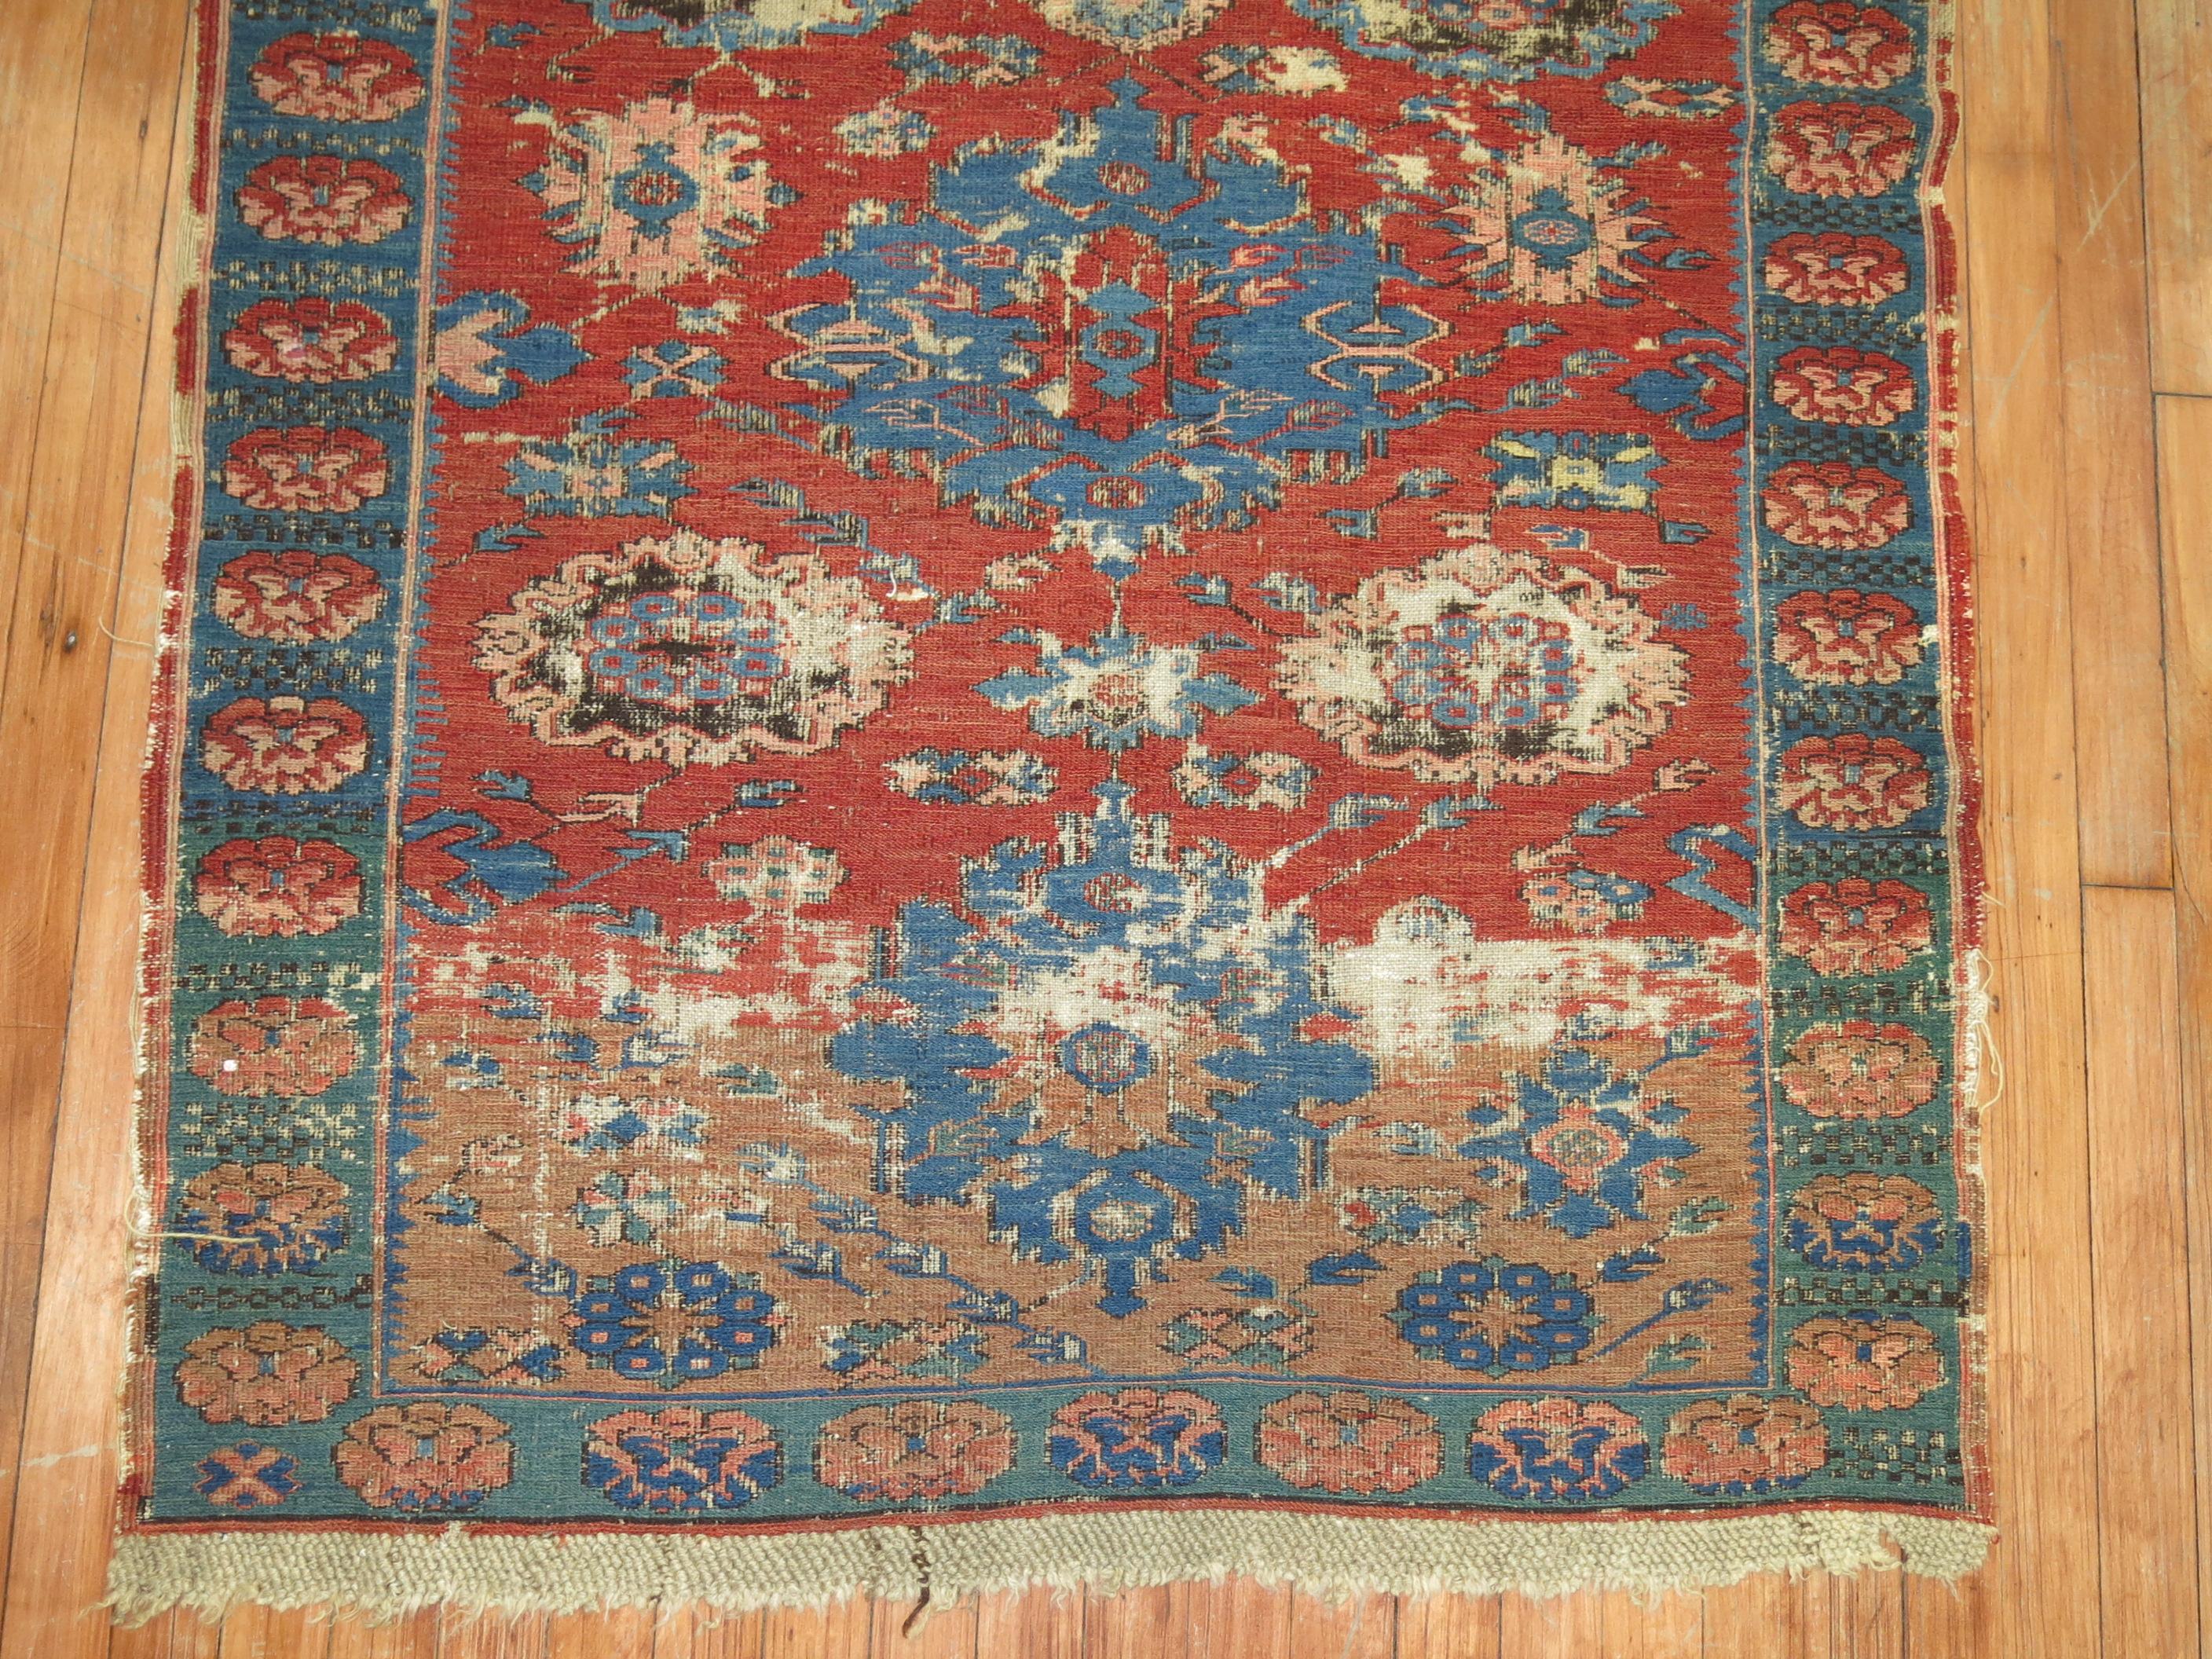 Mid-19th century Persian flat-weave Soumak ‘soumac’ rug with an infamous kuba design found in 19th century Caucasian rugs.

3'10'' x 4'11''